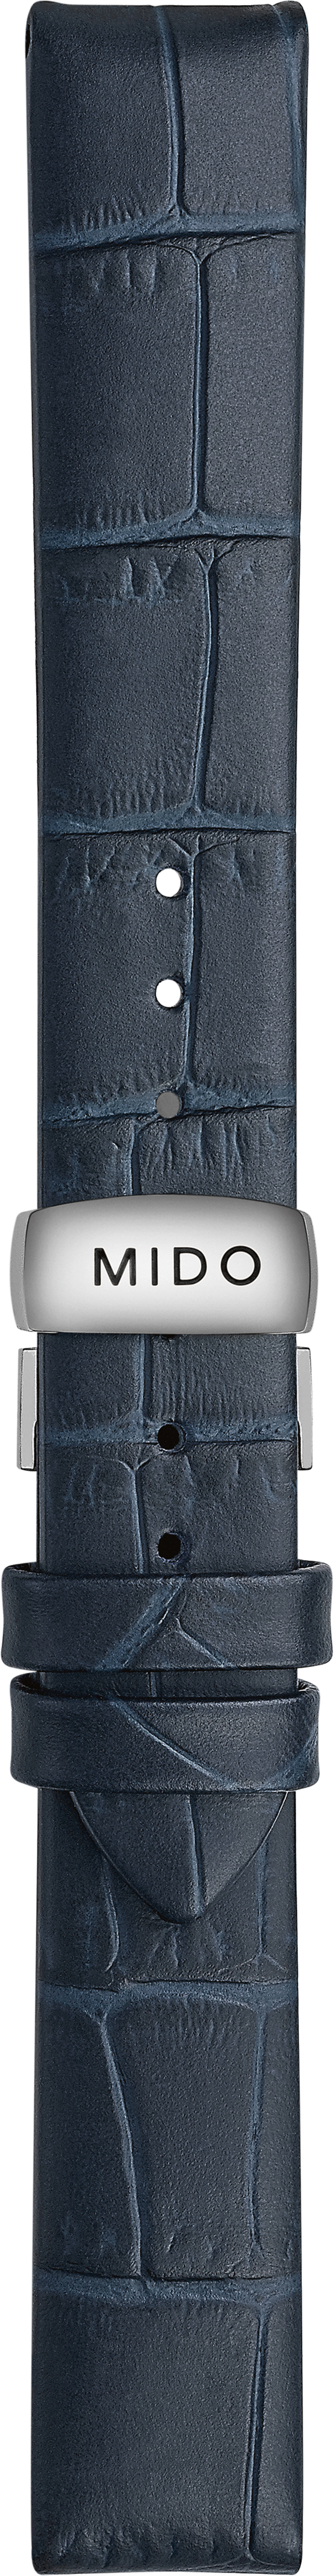 Mido Rainflower blaues Rindsleder-Armband